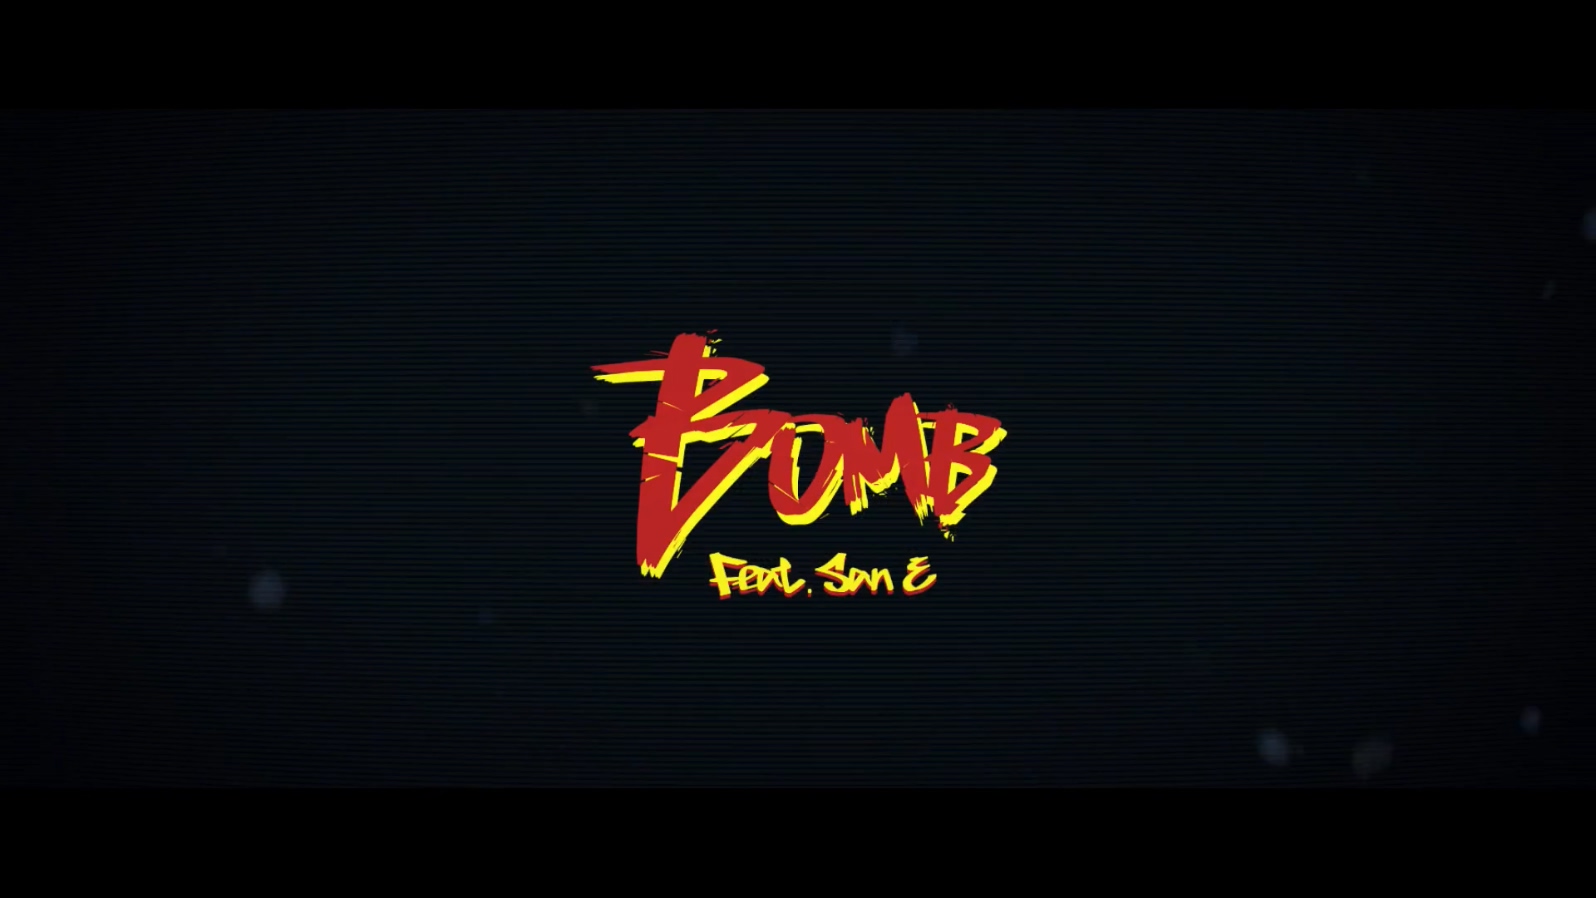 RAVI 《BOMB》(Feat. San E) 1080P